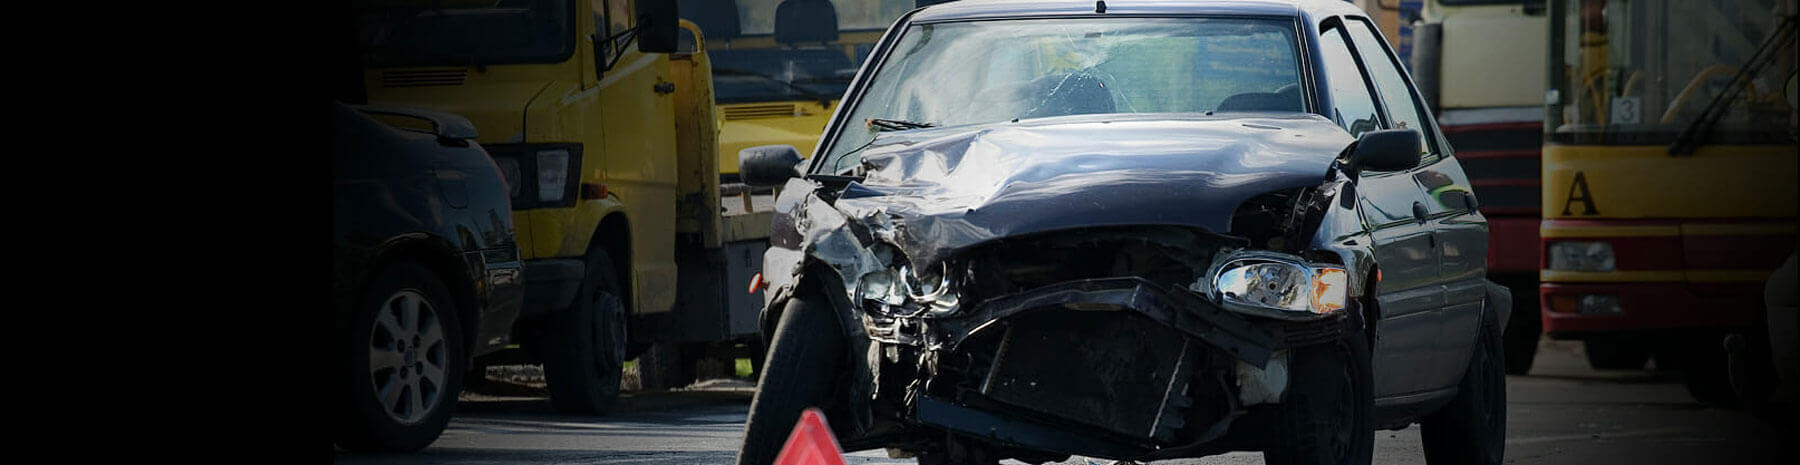 Macon, Georgia Vehicle Accidents Lawyer